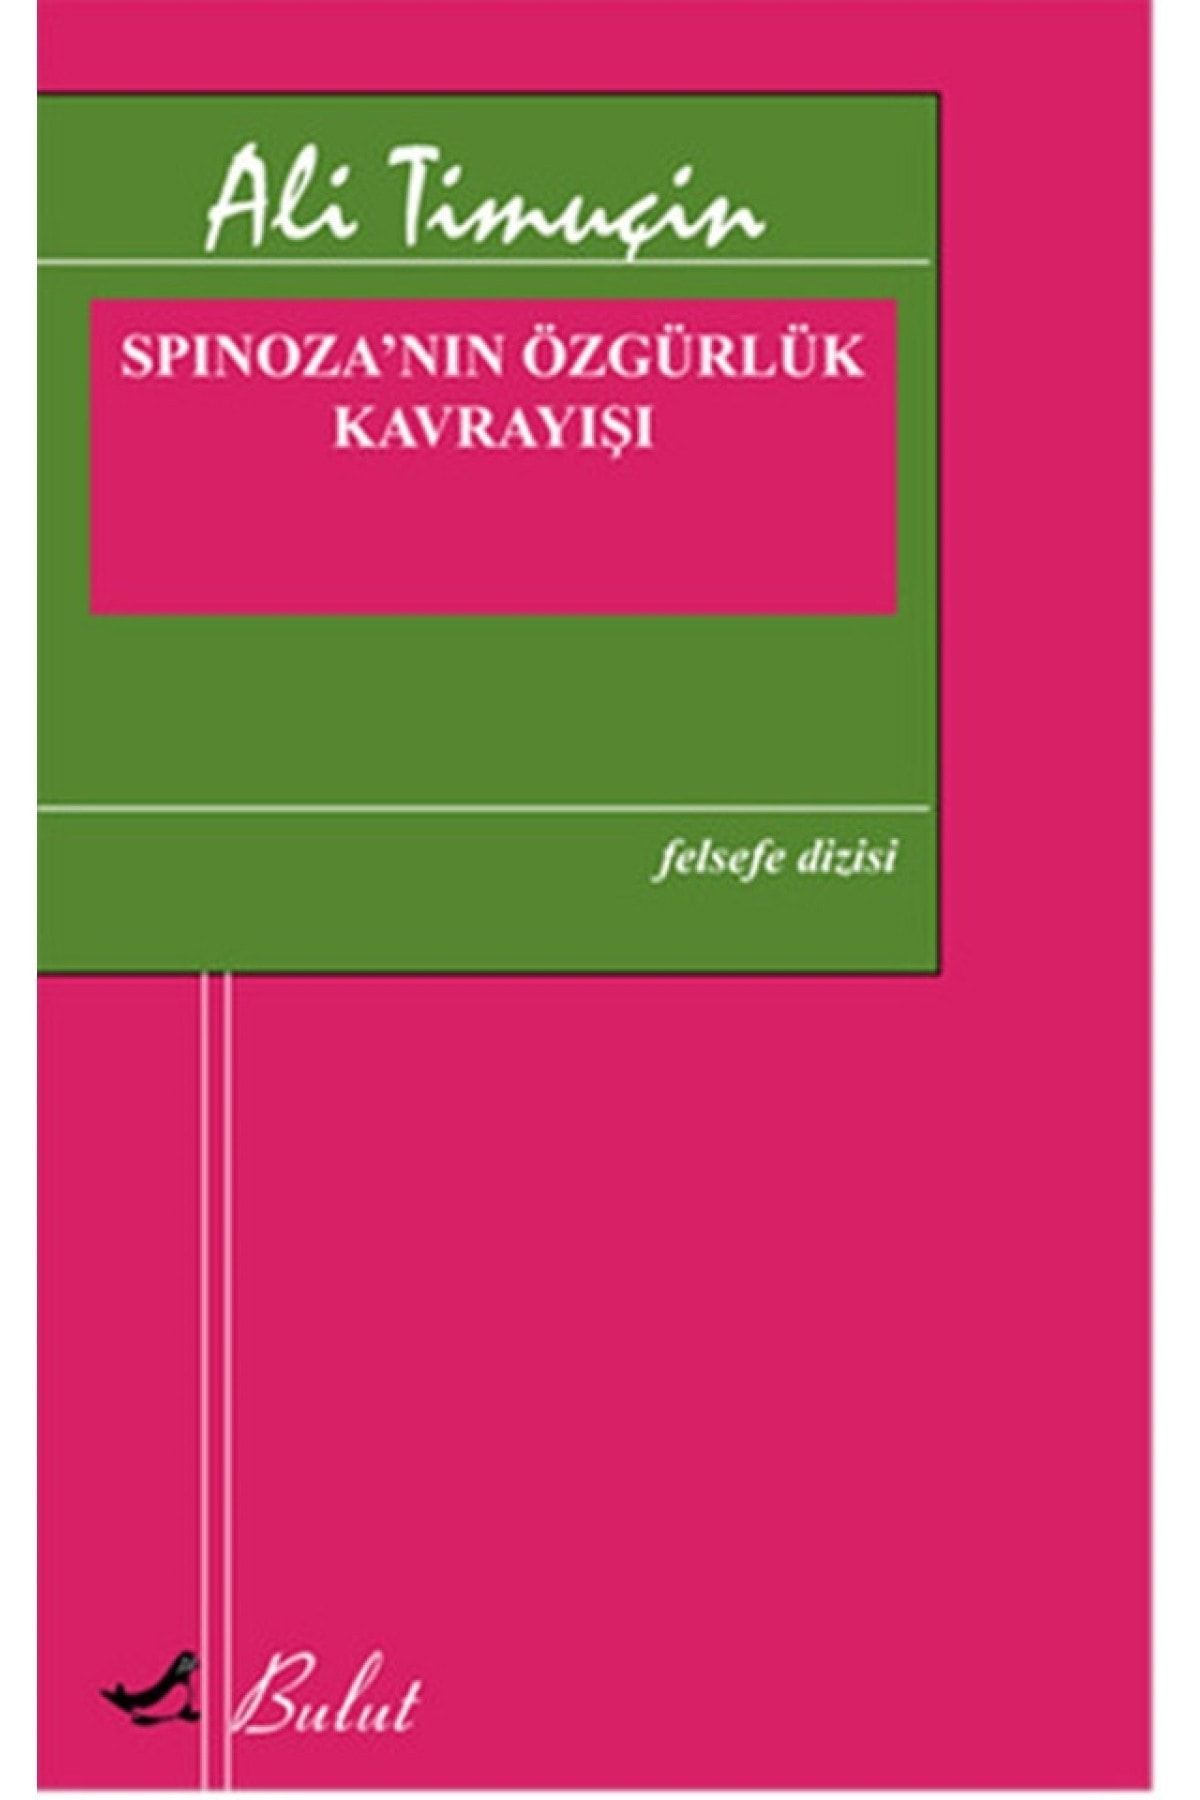 Bulut Yayınları Spinoza’nın Özgürlük Kavrayışı - - Ali Timuçin Kitabı